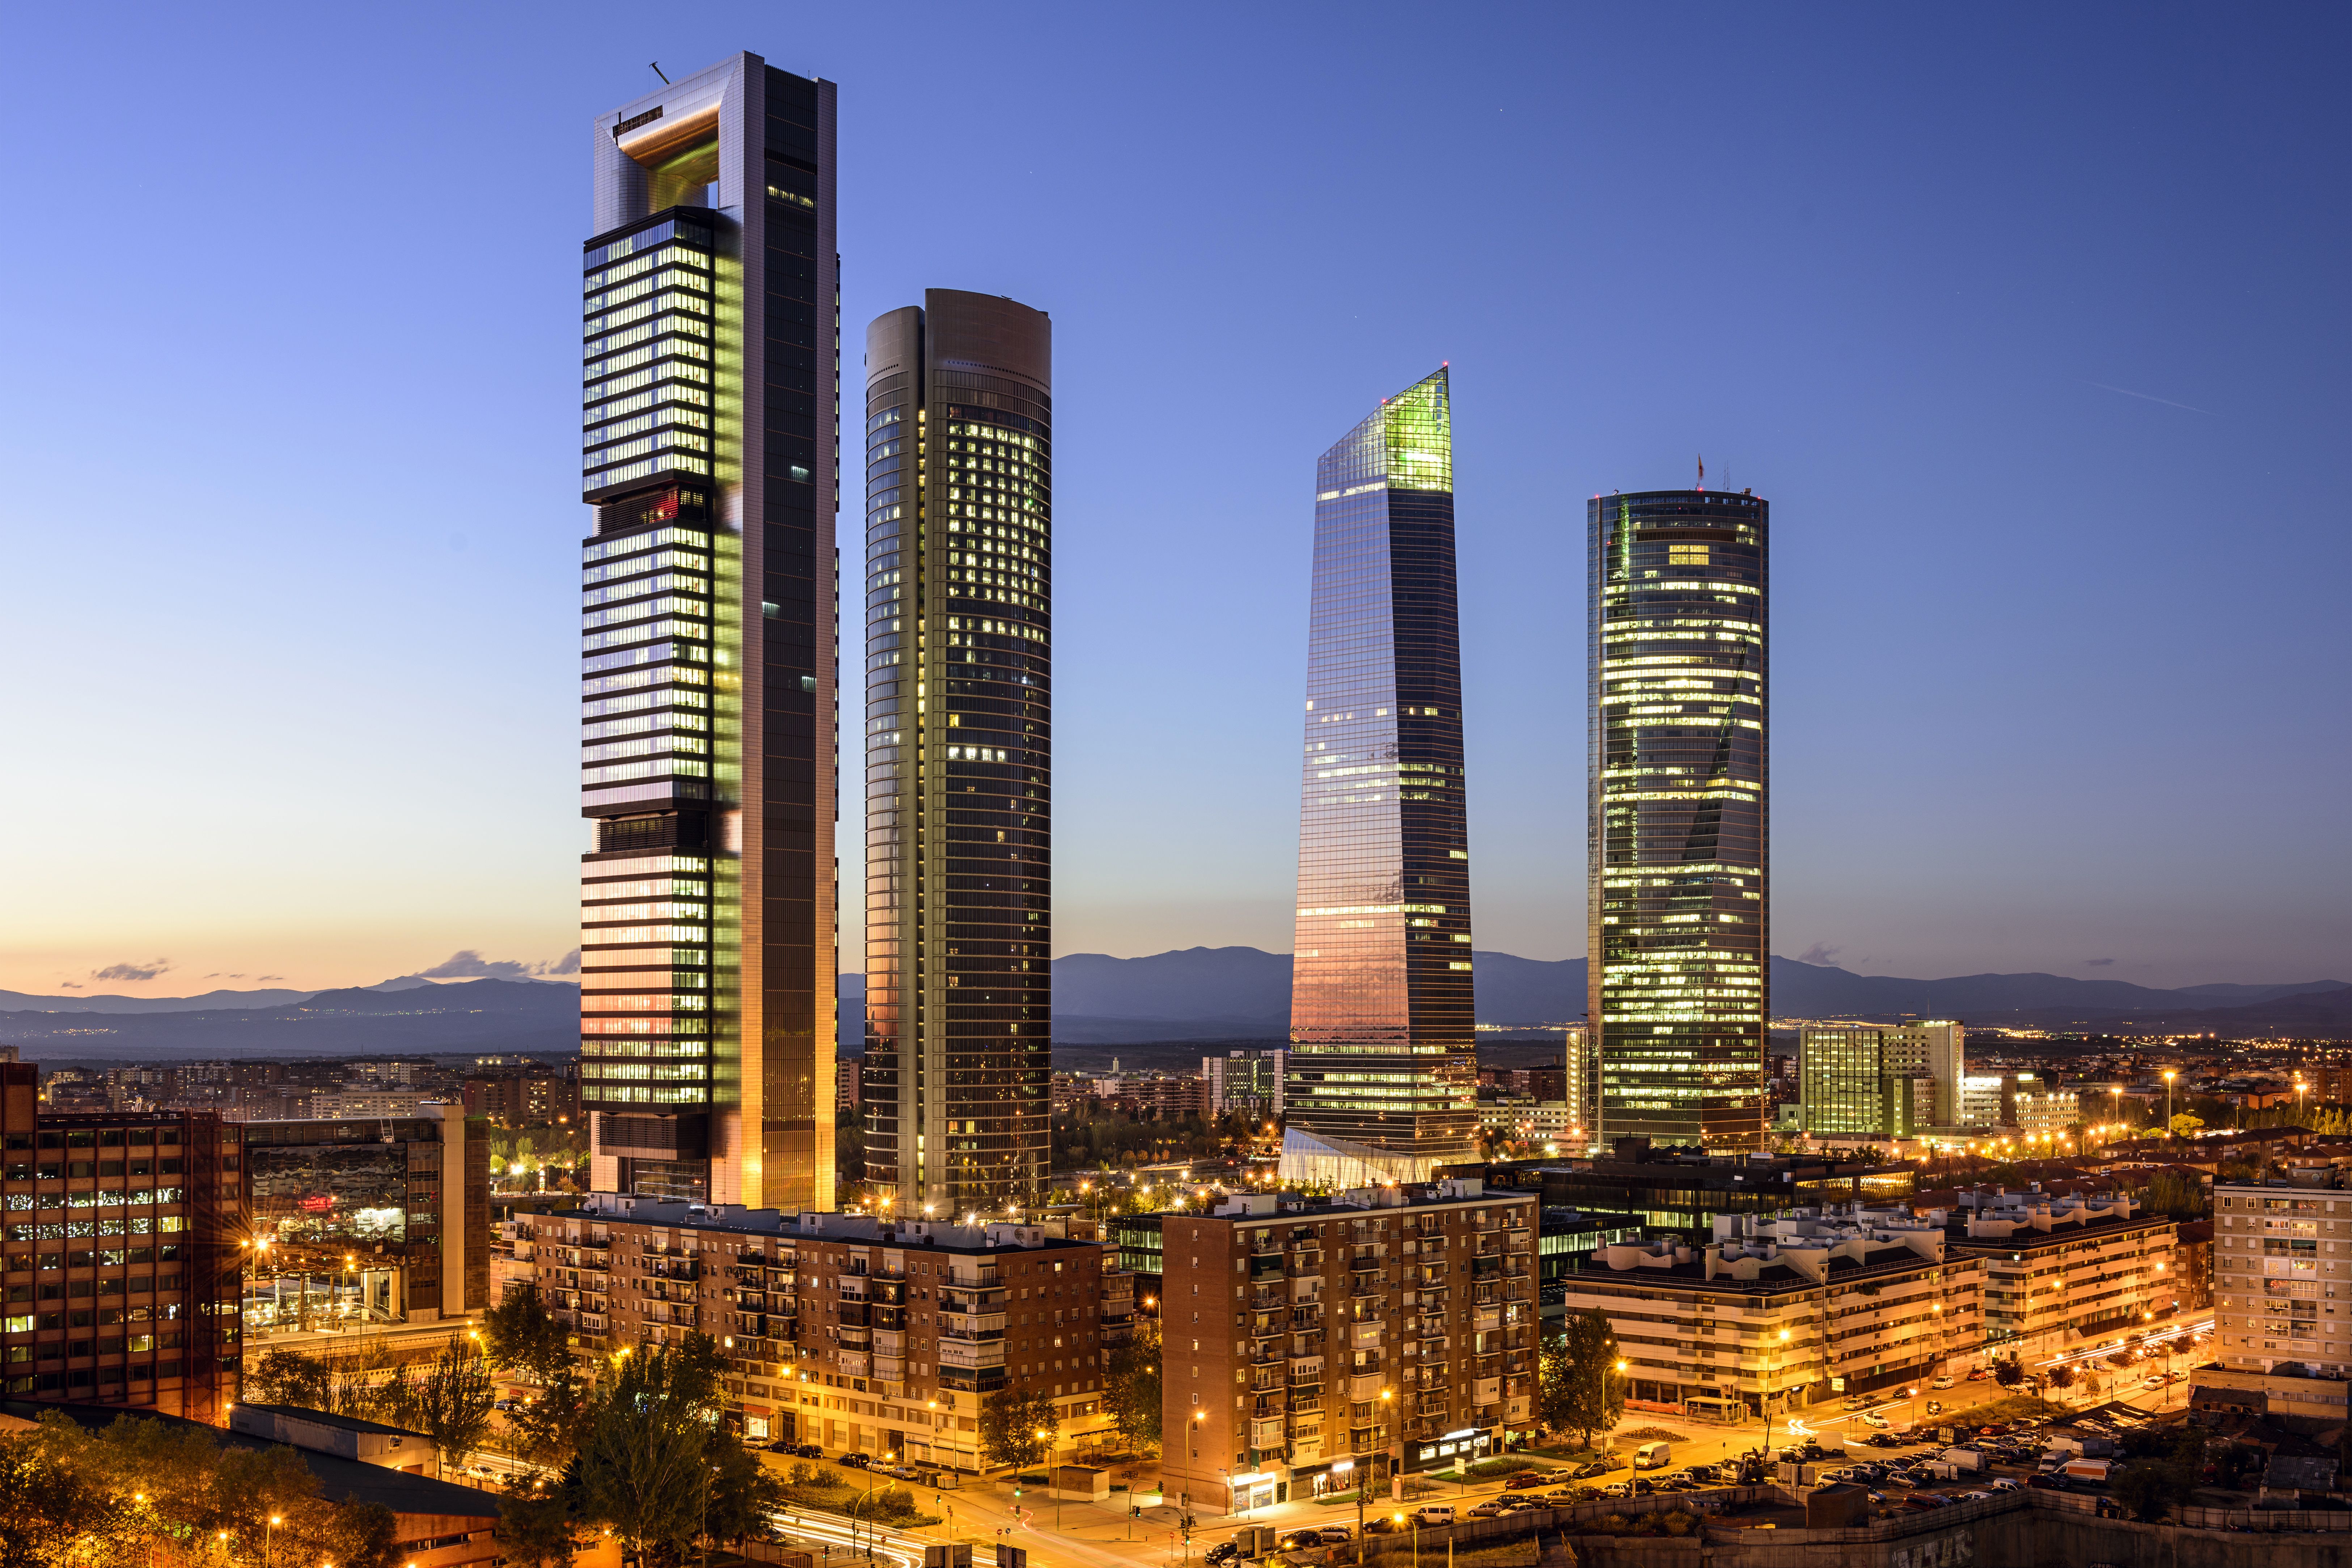 image Madrid Spain Street night time Skyscrapers Cities 6500x4334